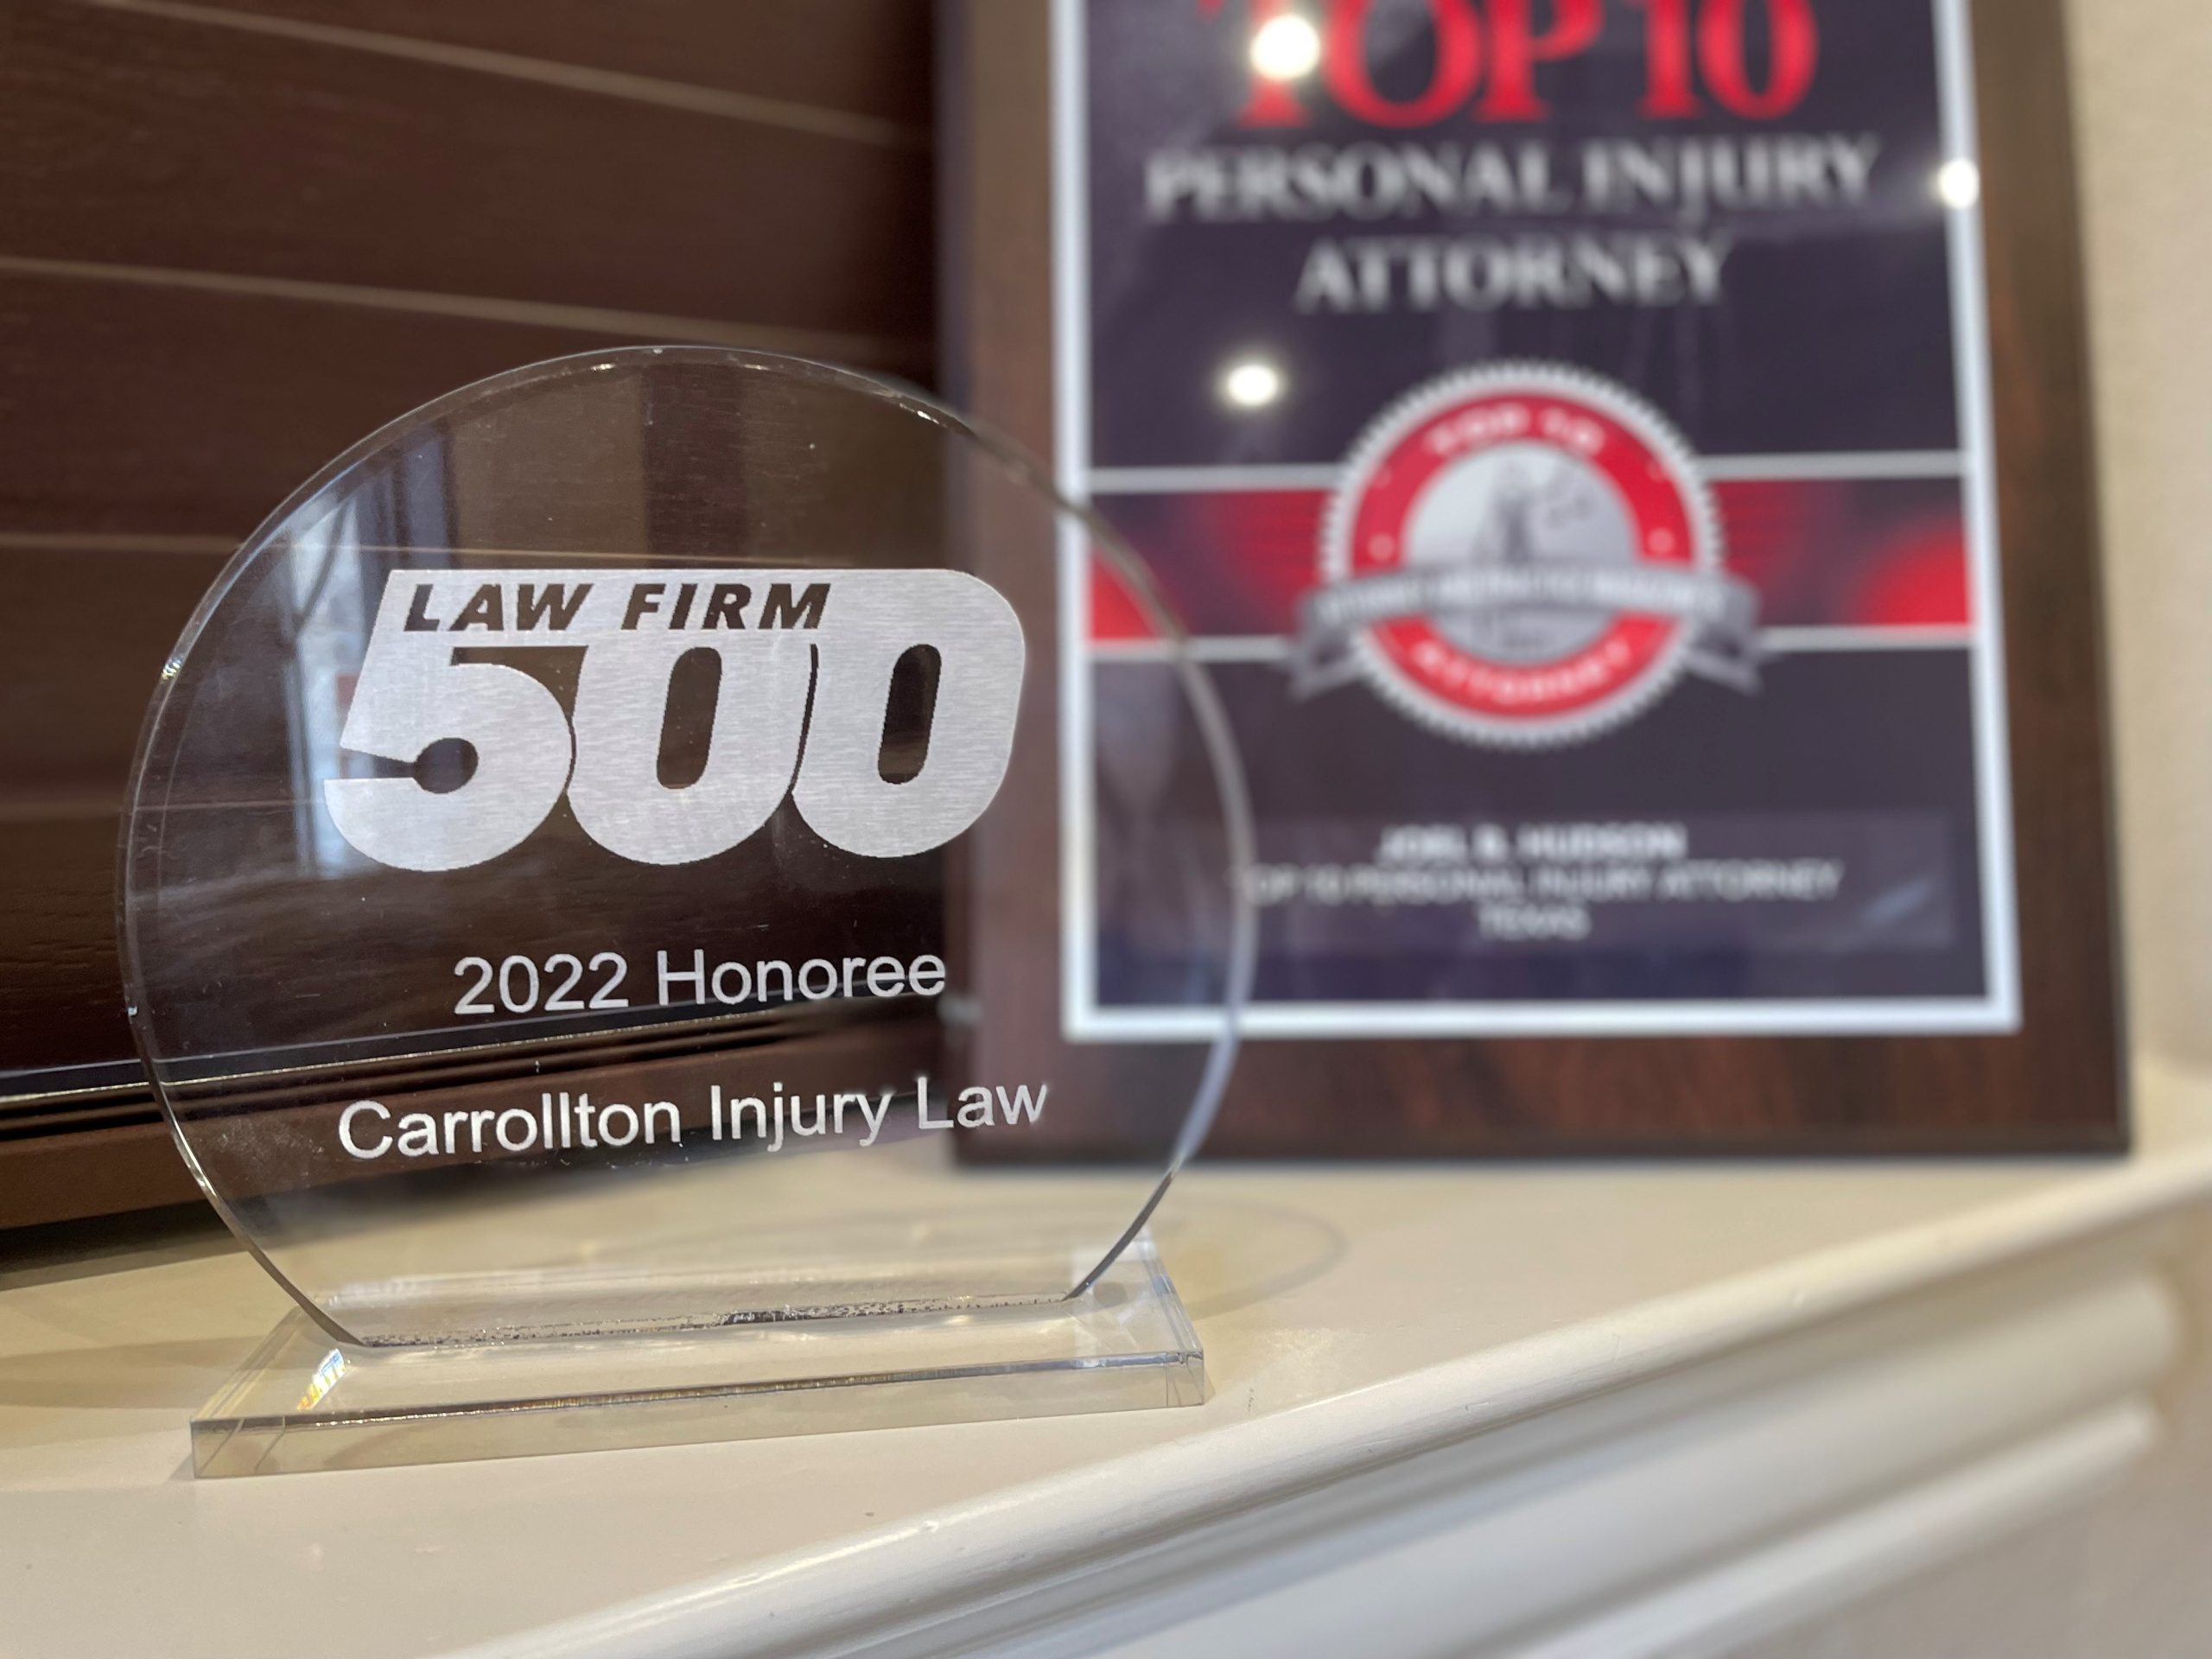 Carrollton Injury Law 2022 Law Firm Honoree Award